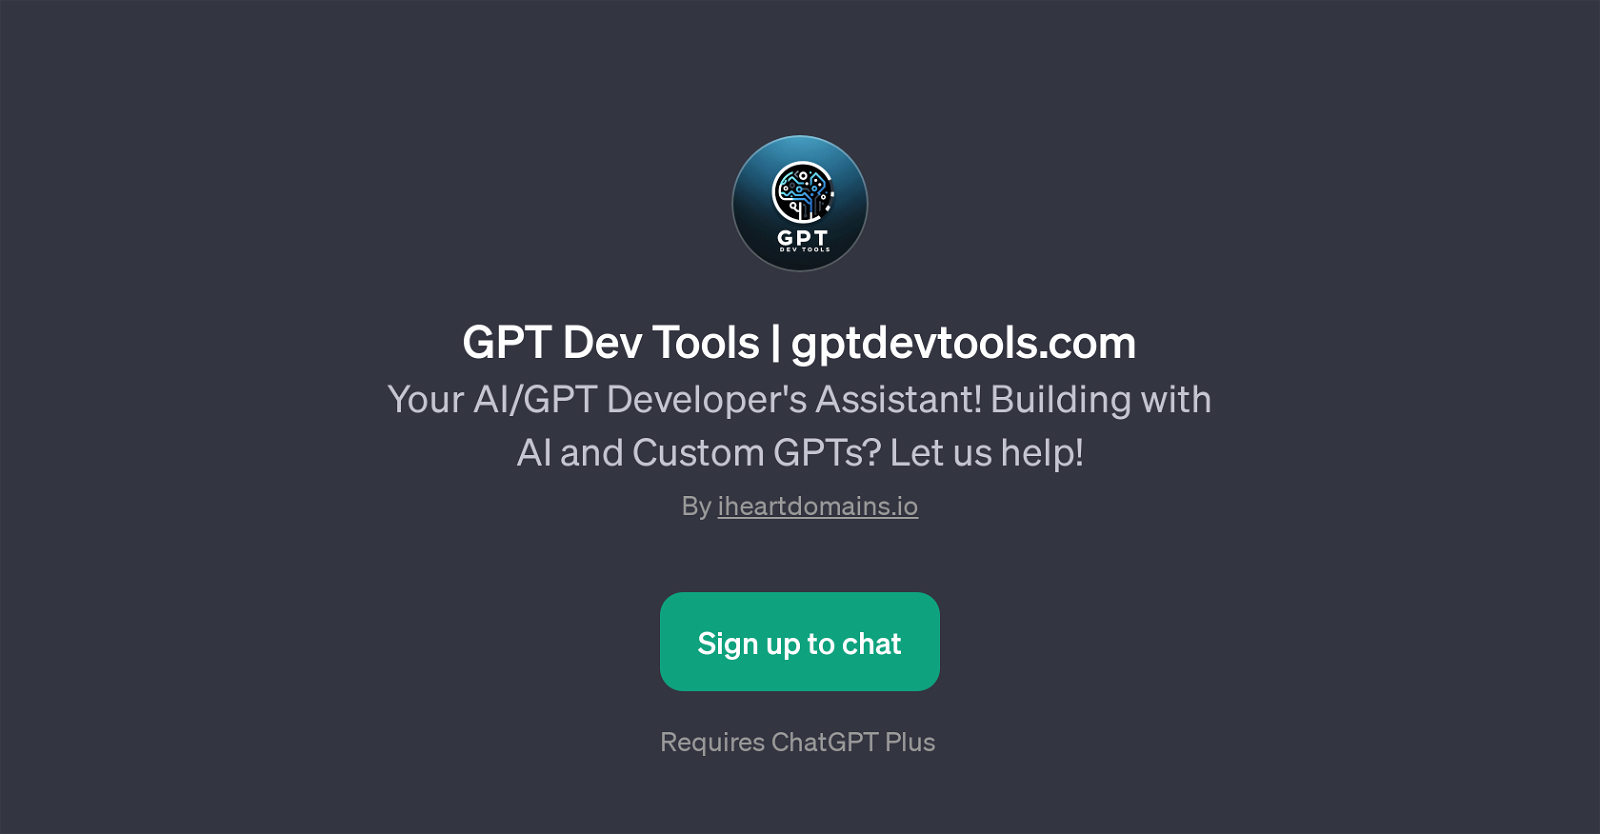 GPT Dev Tools website